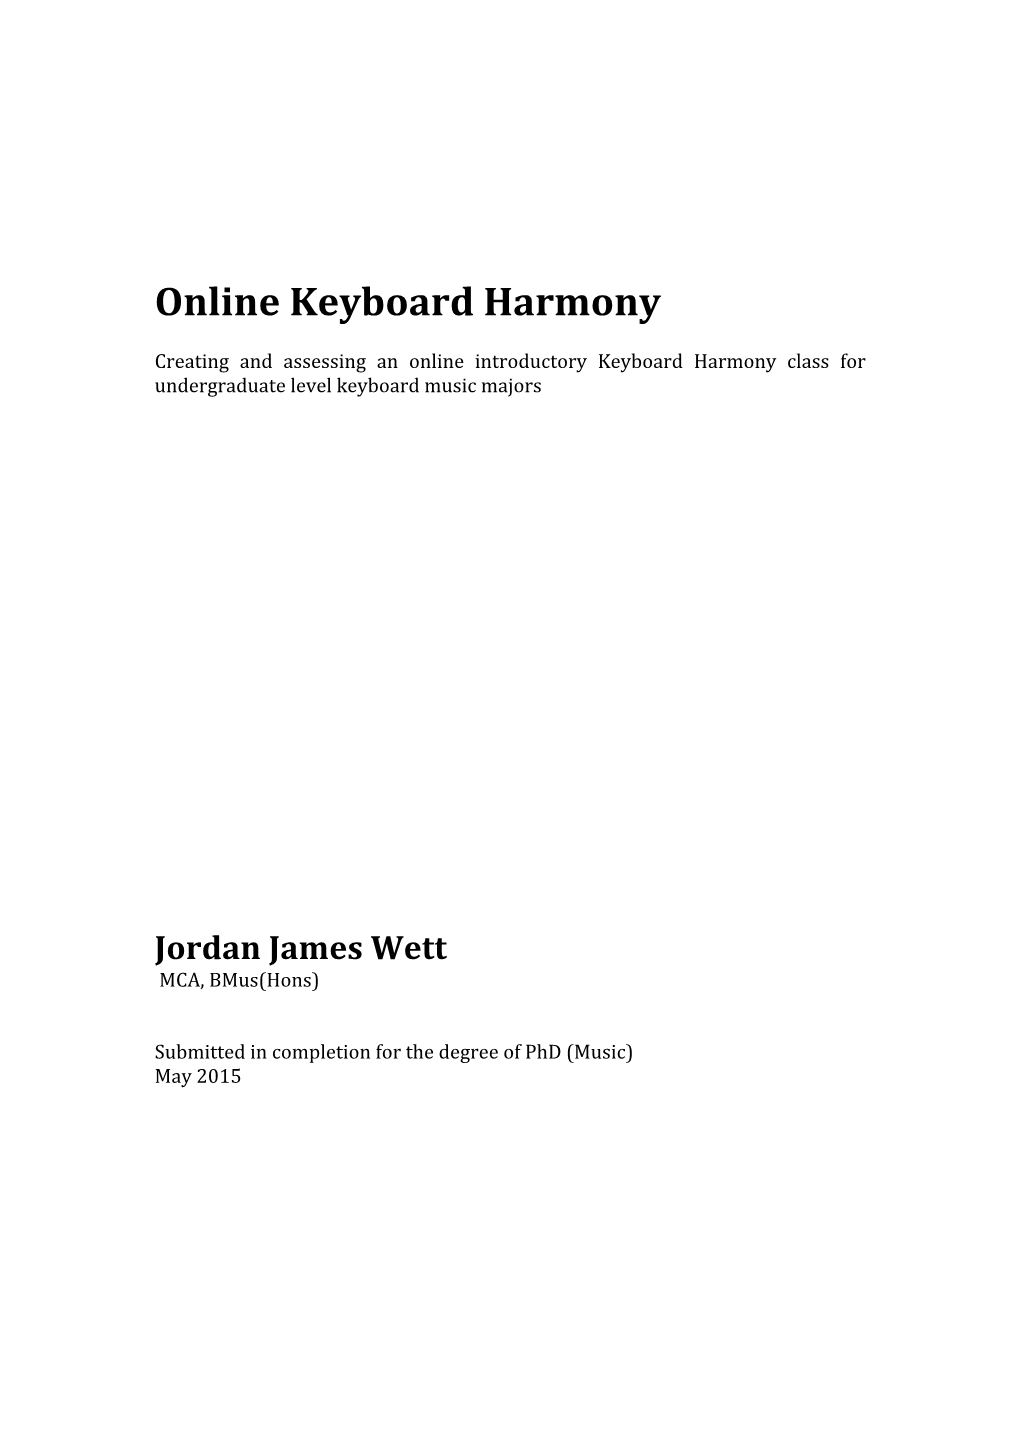 Wett, Jordan Phd Thesis Online Keyboard Harmony